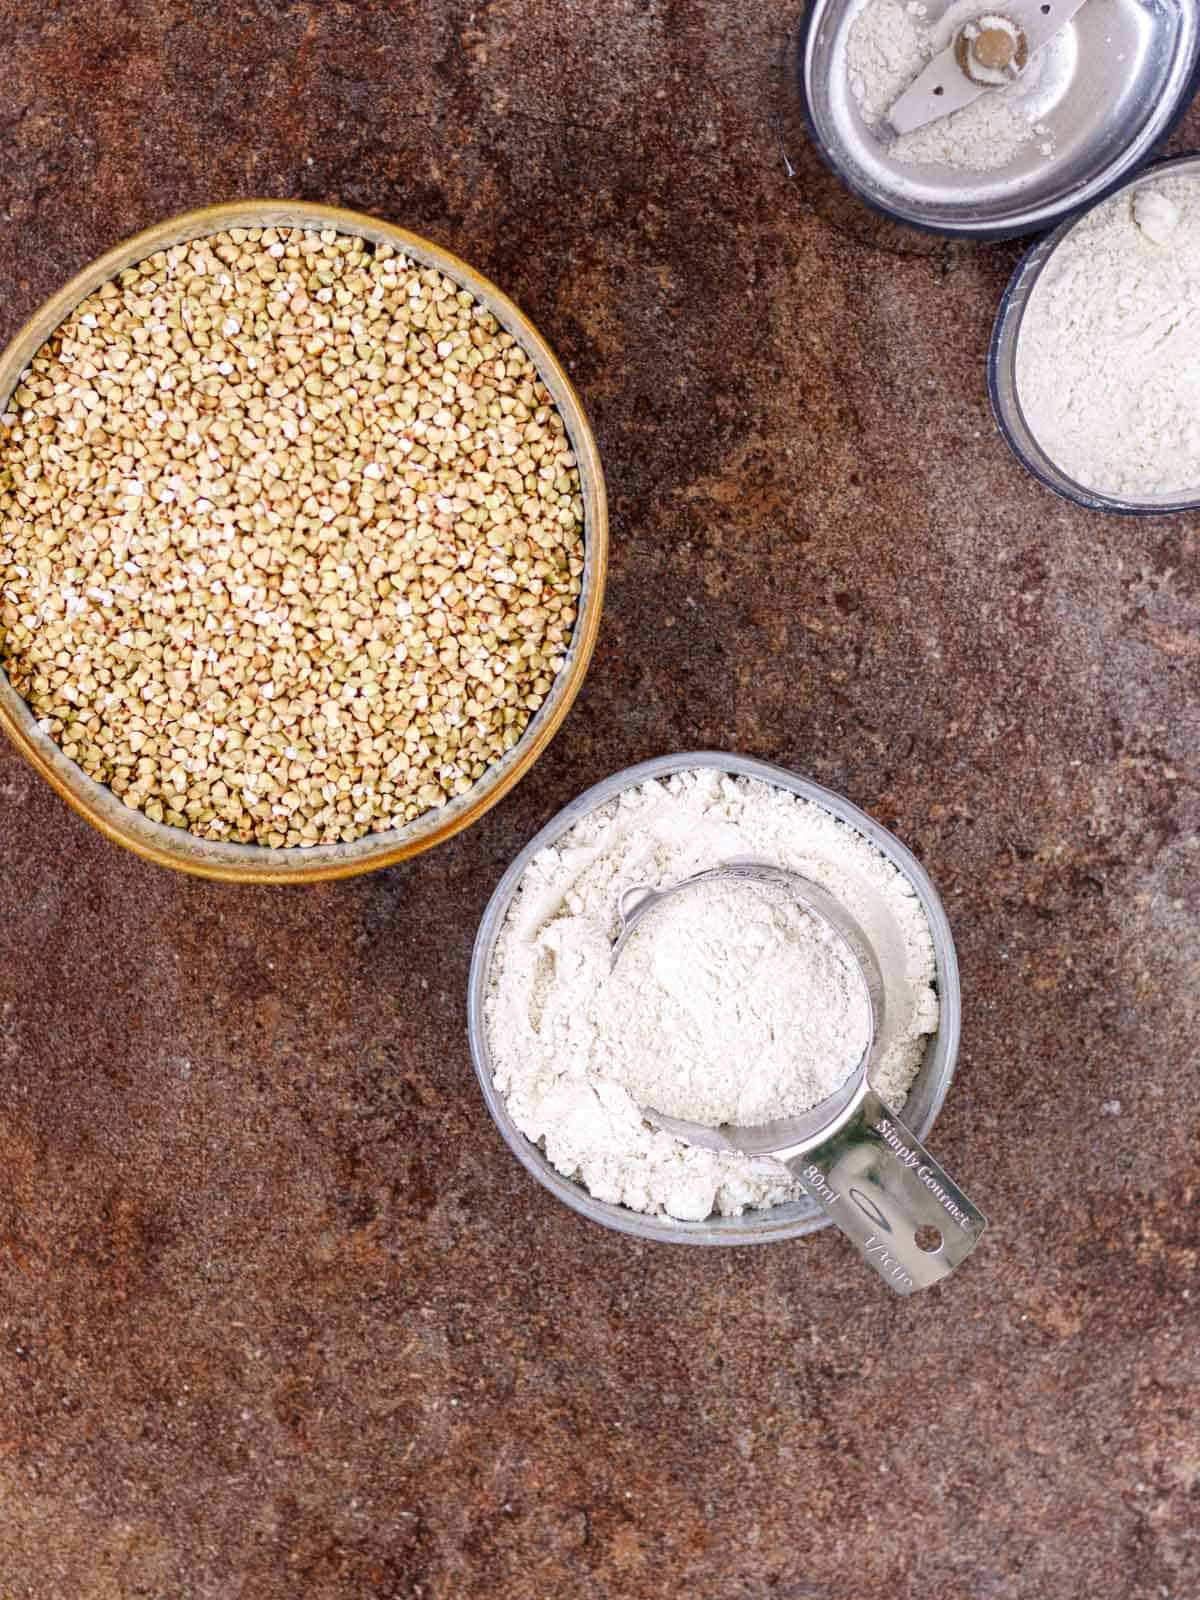 Grind whole raw buckwheat groats for gluten free flour.